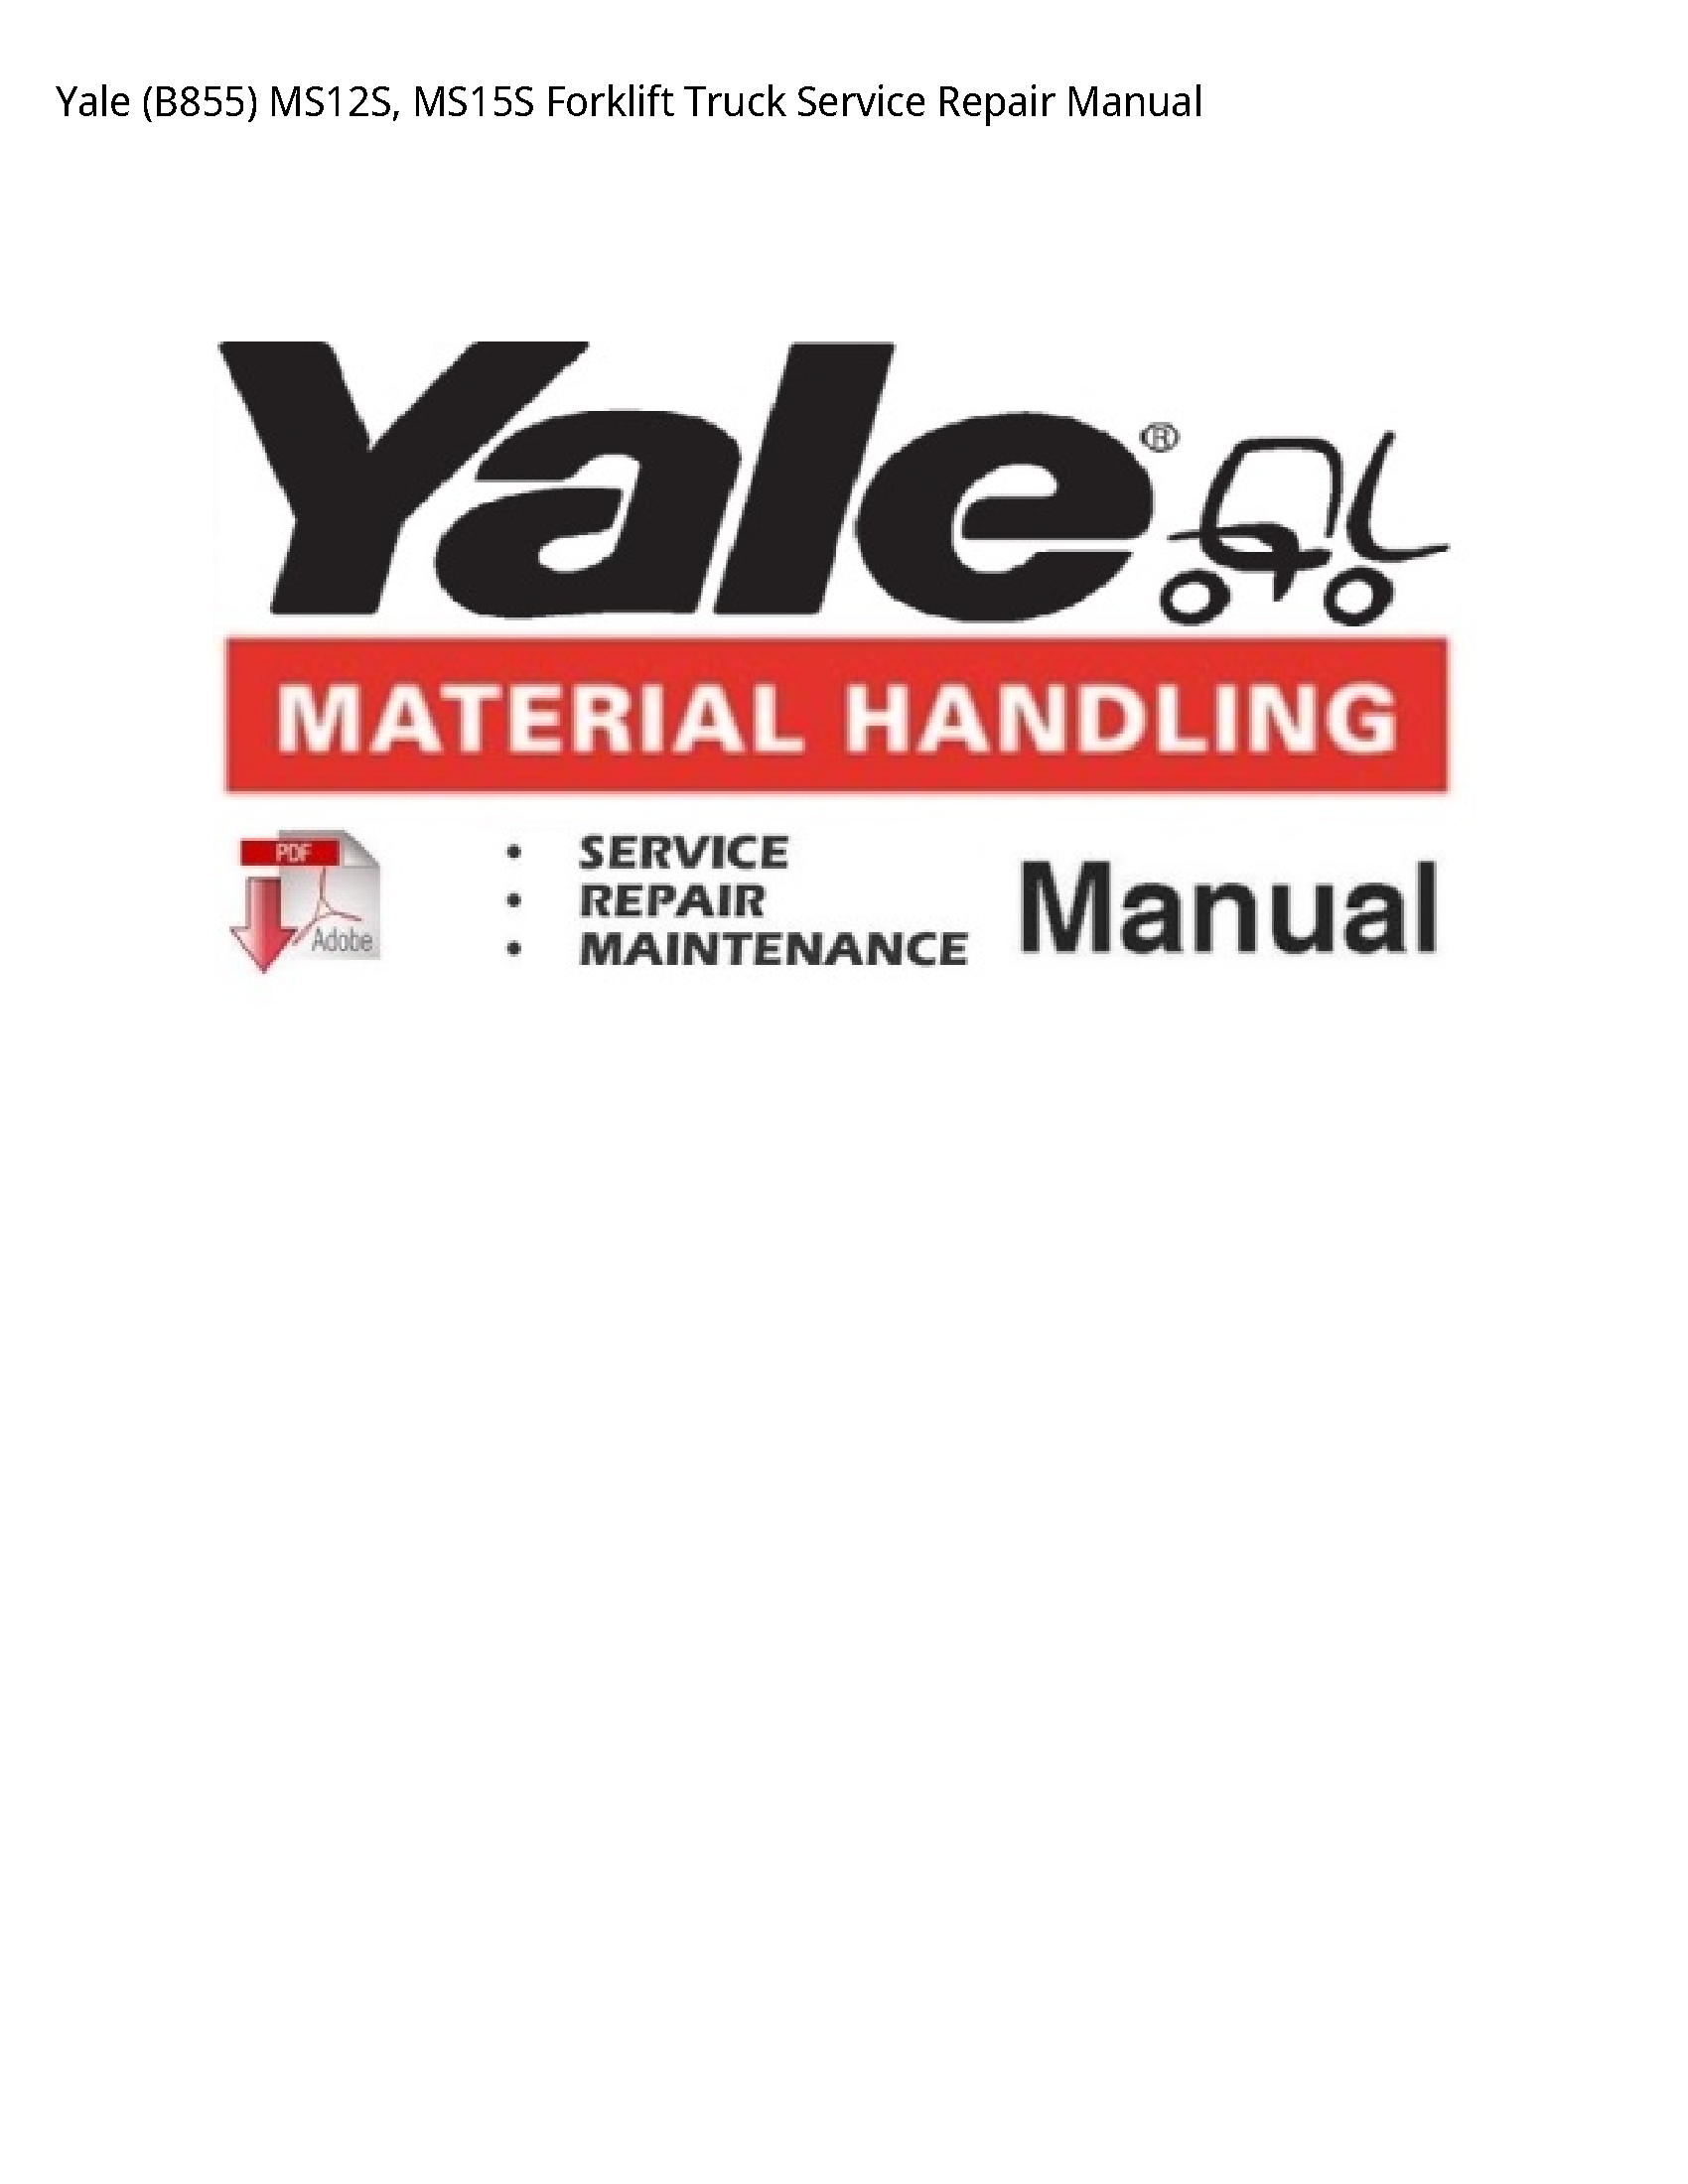 Yale (B855) Forklift Truck manual